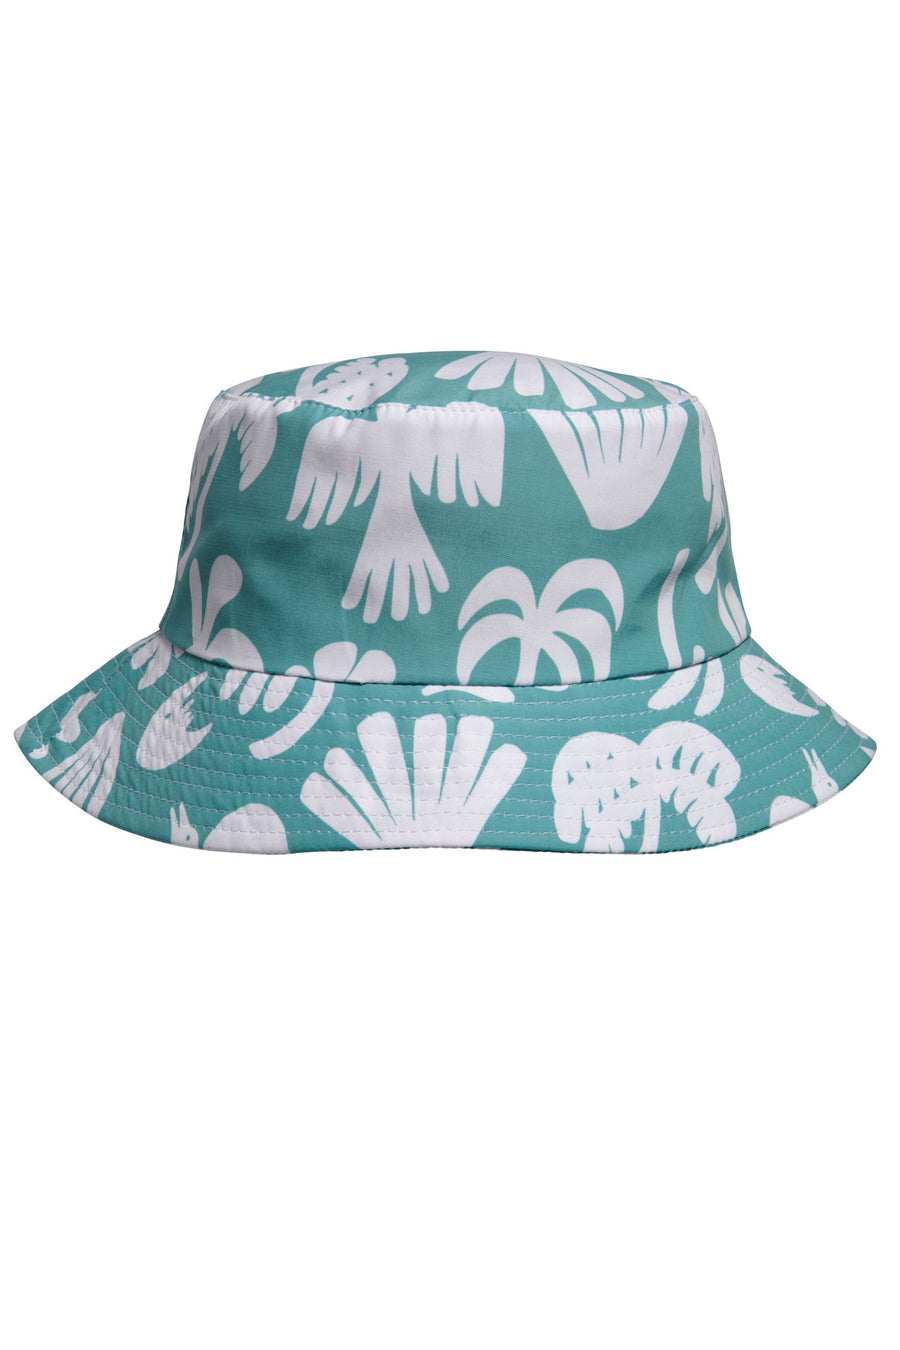 Seaesta Surf x Ty Williams / Cloud / Bucket Hat